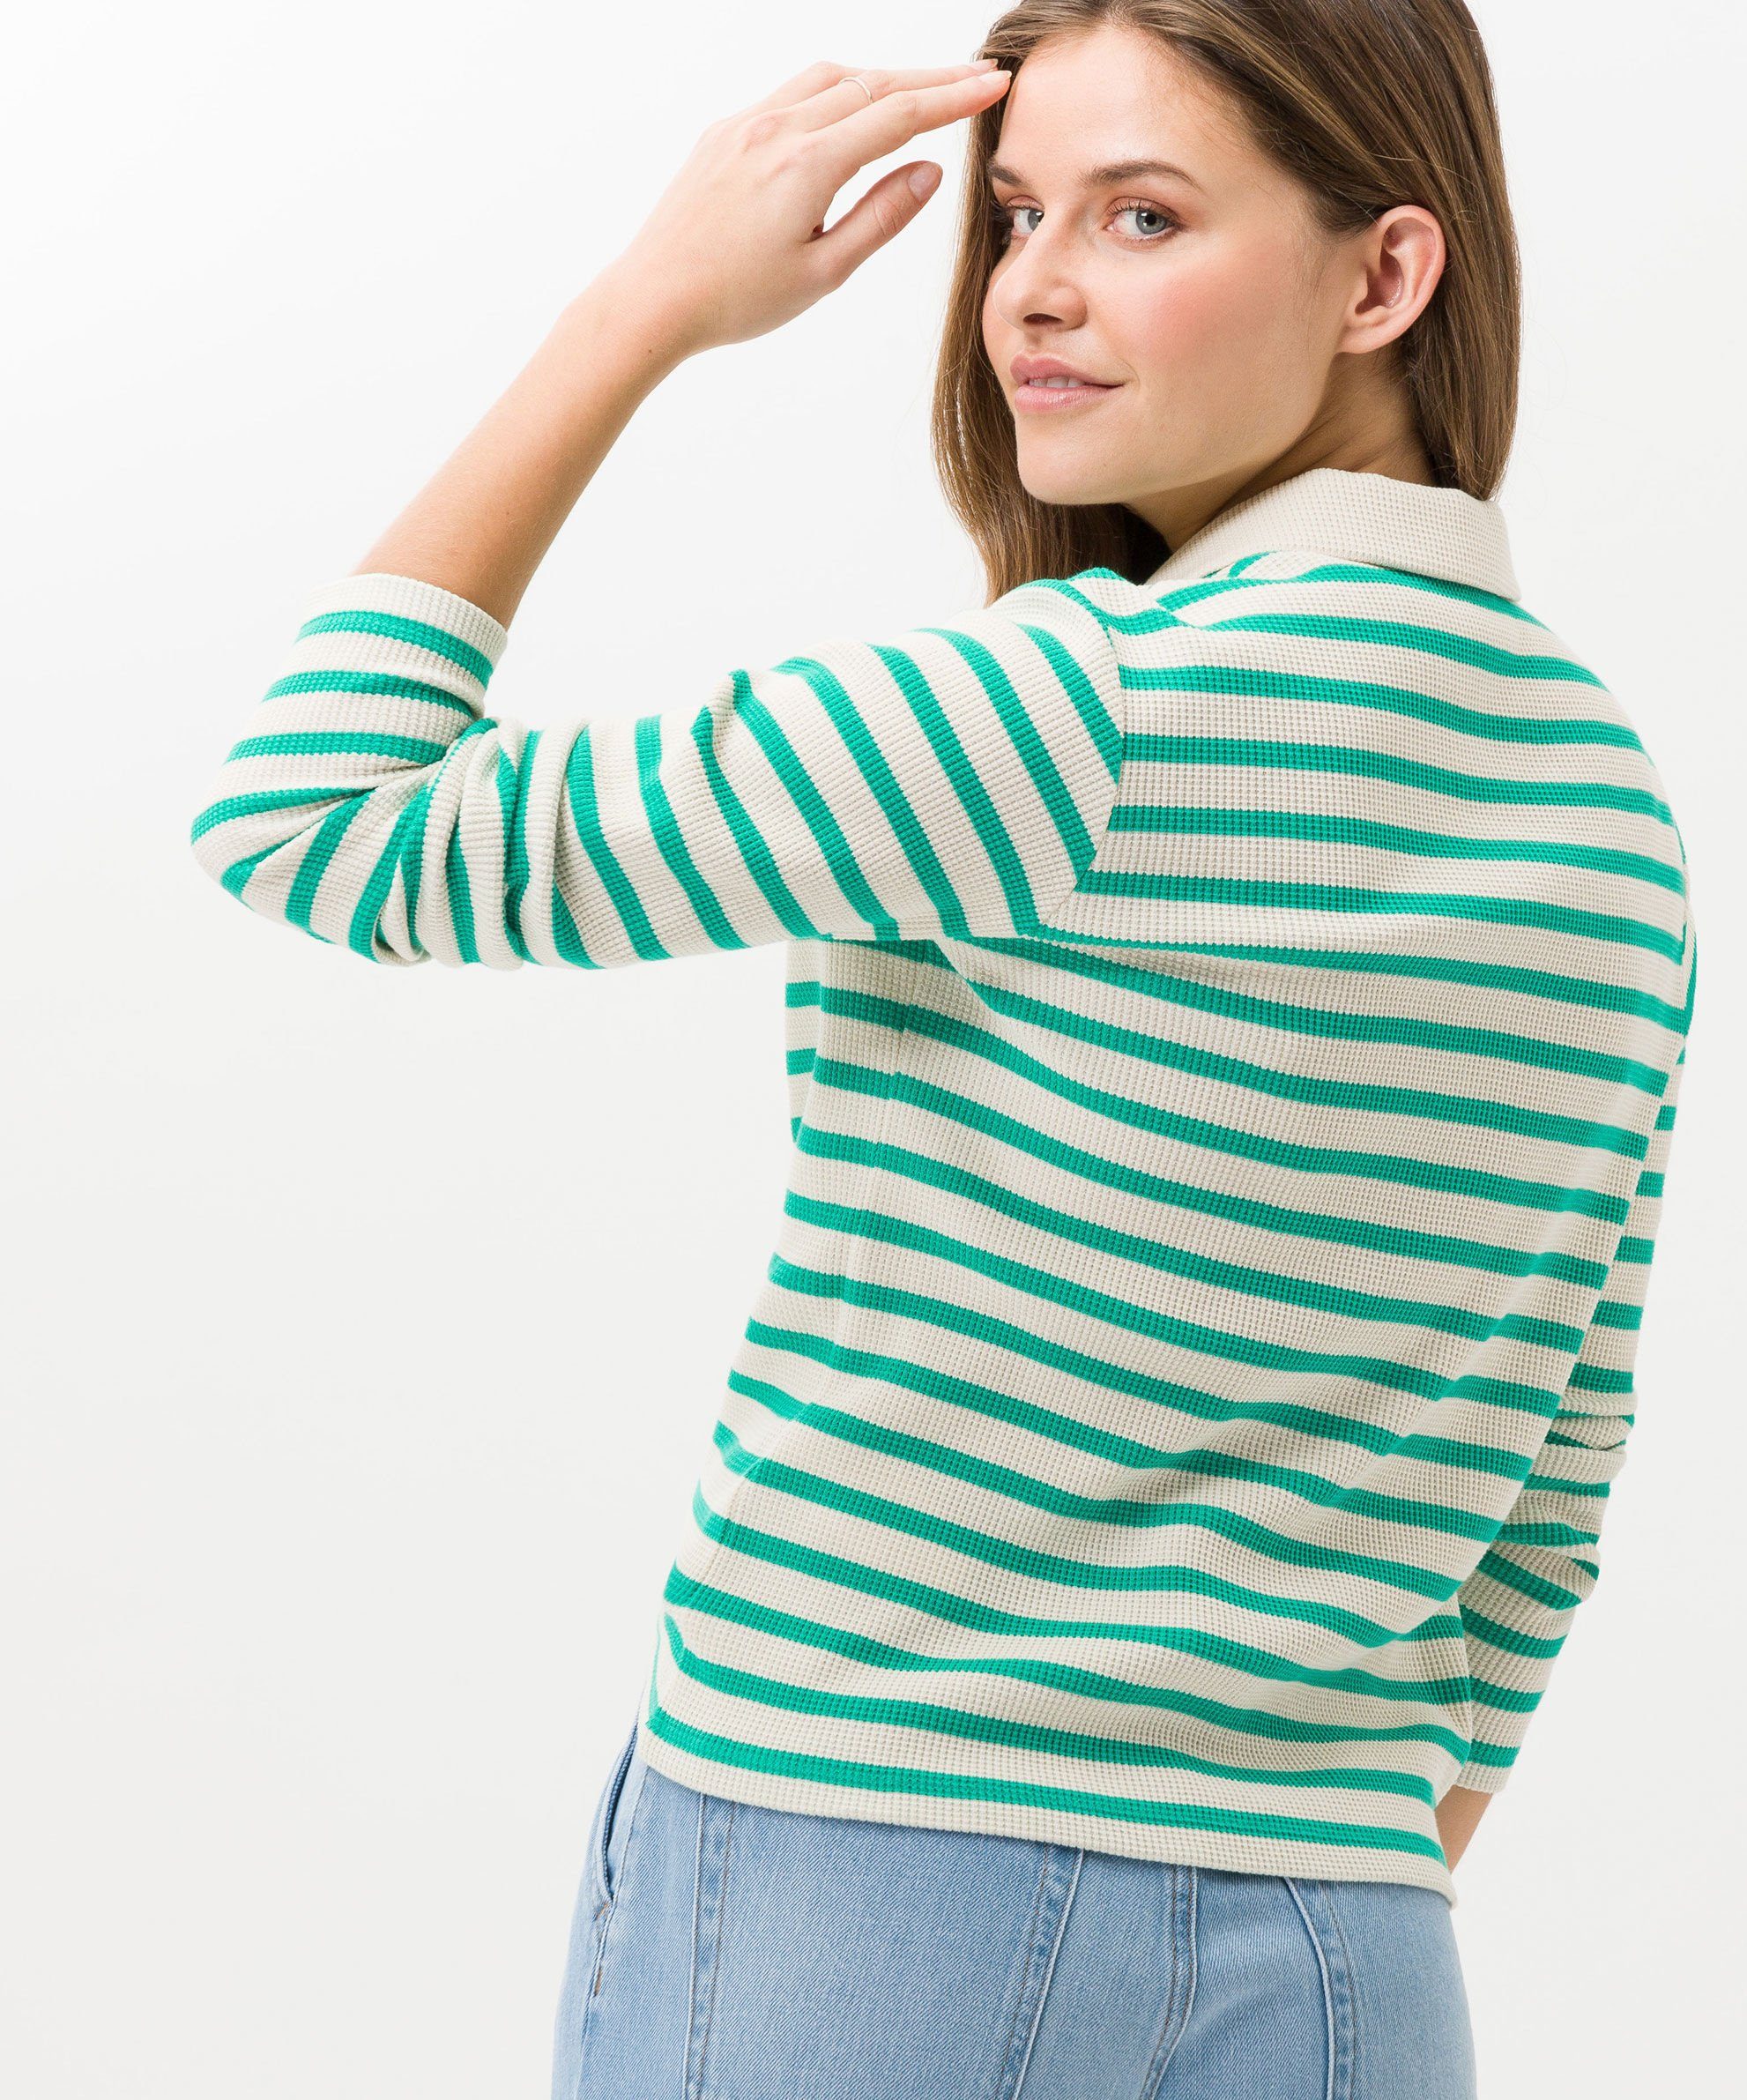 Brax Sweatshirt Sweatshirt in grün Streifenoptik